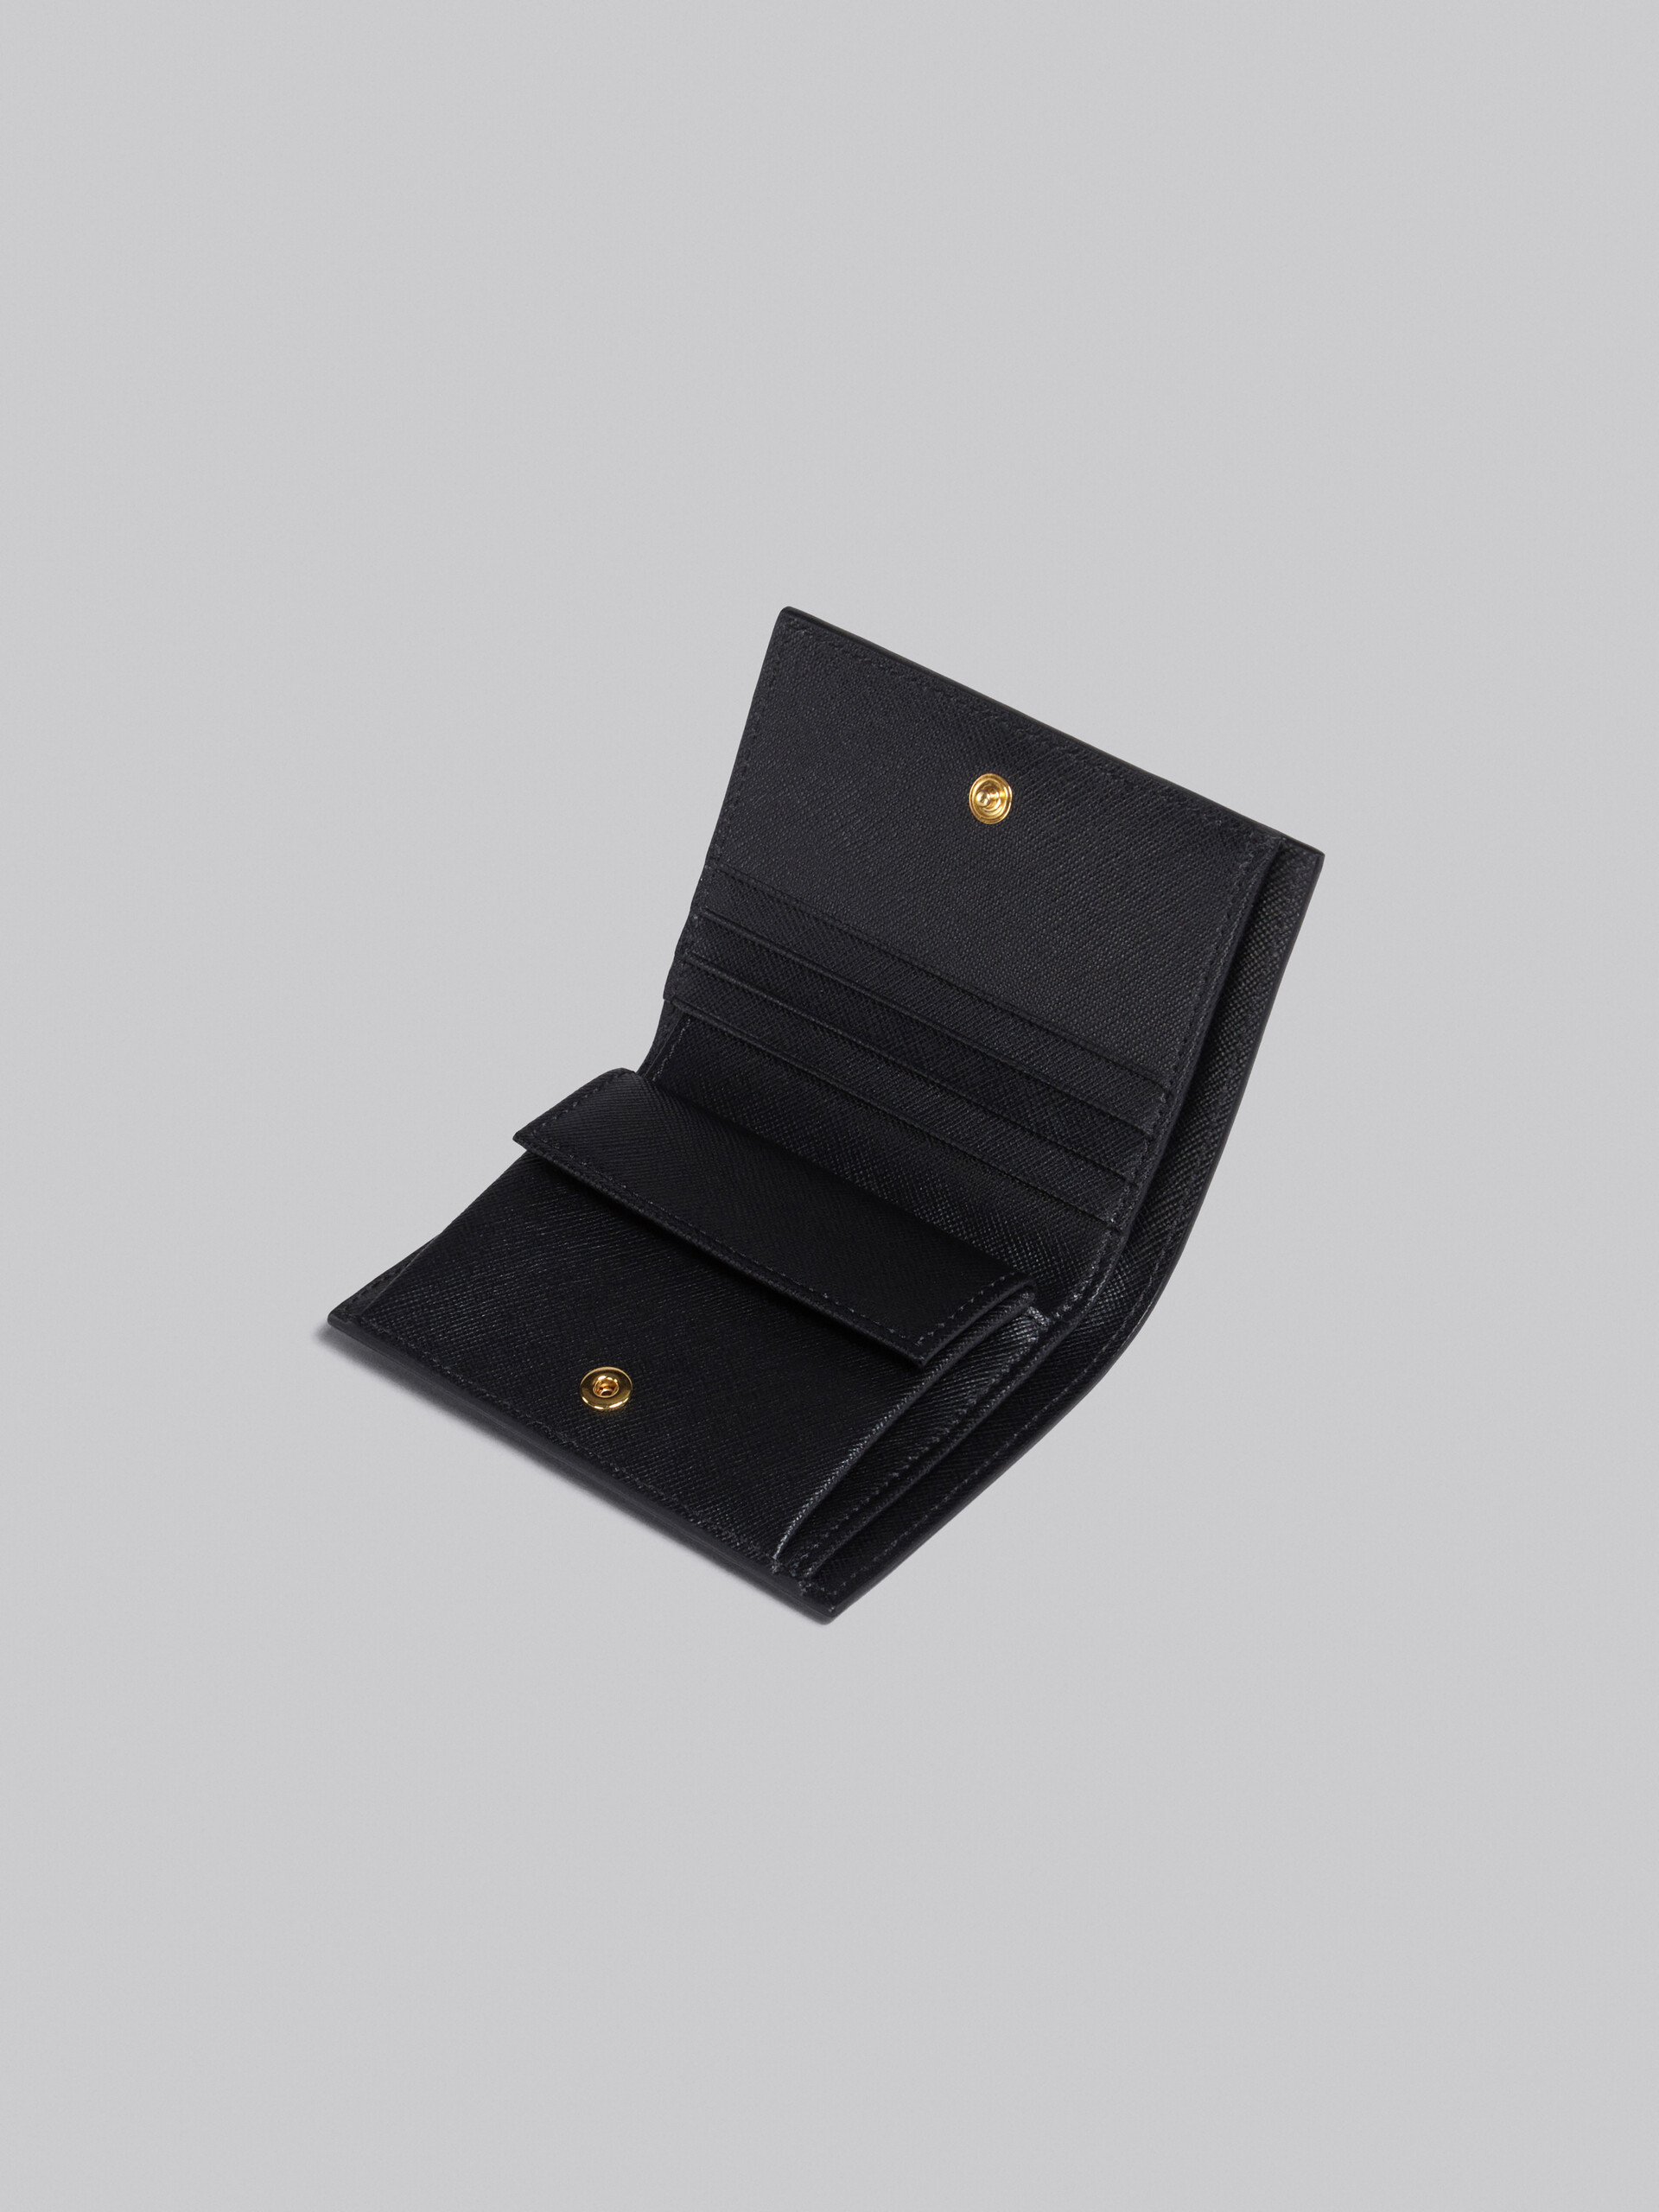 Black Saffiano Leather Wallet, Men's Leather Goods